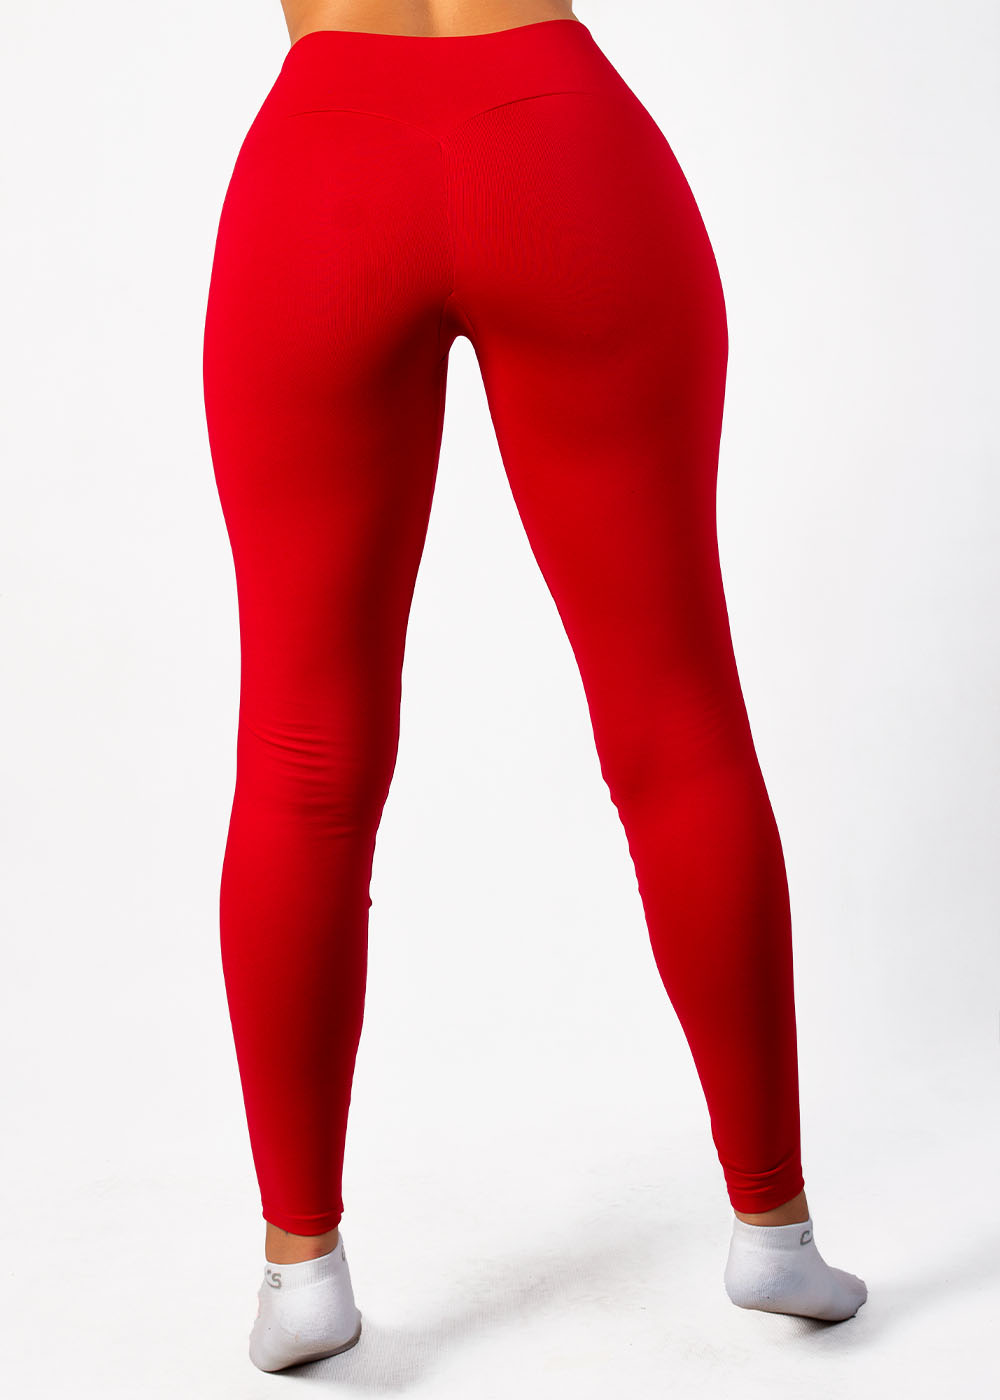 Legging deportivo Rojo - $490.00